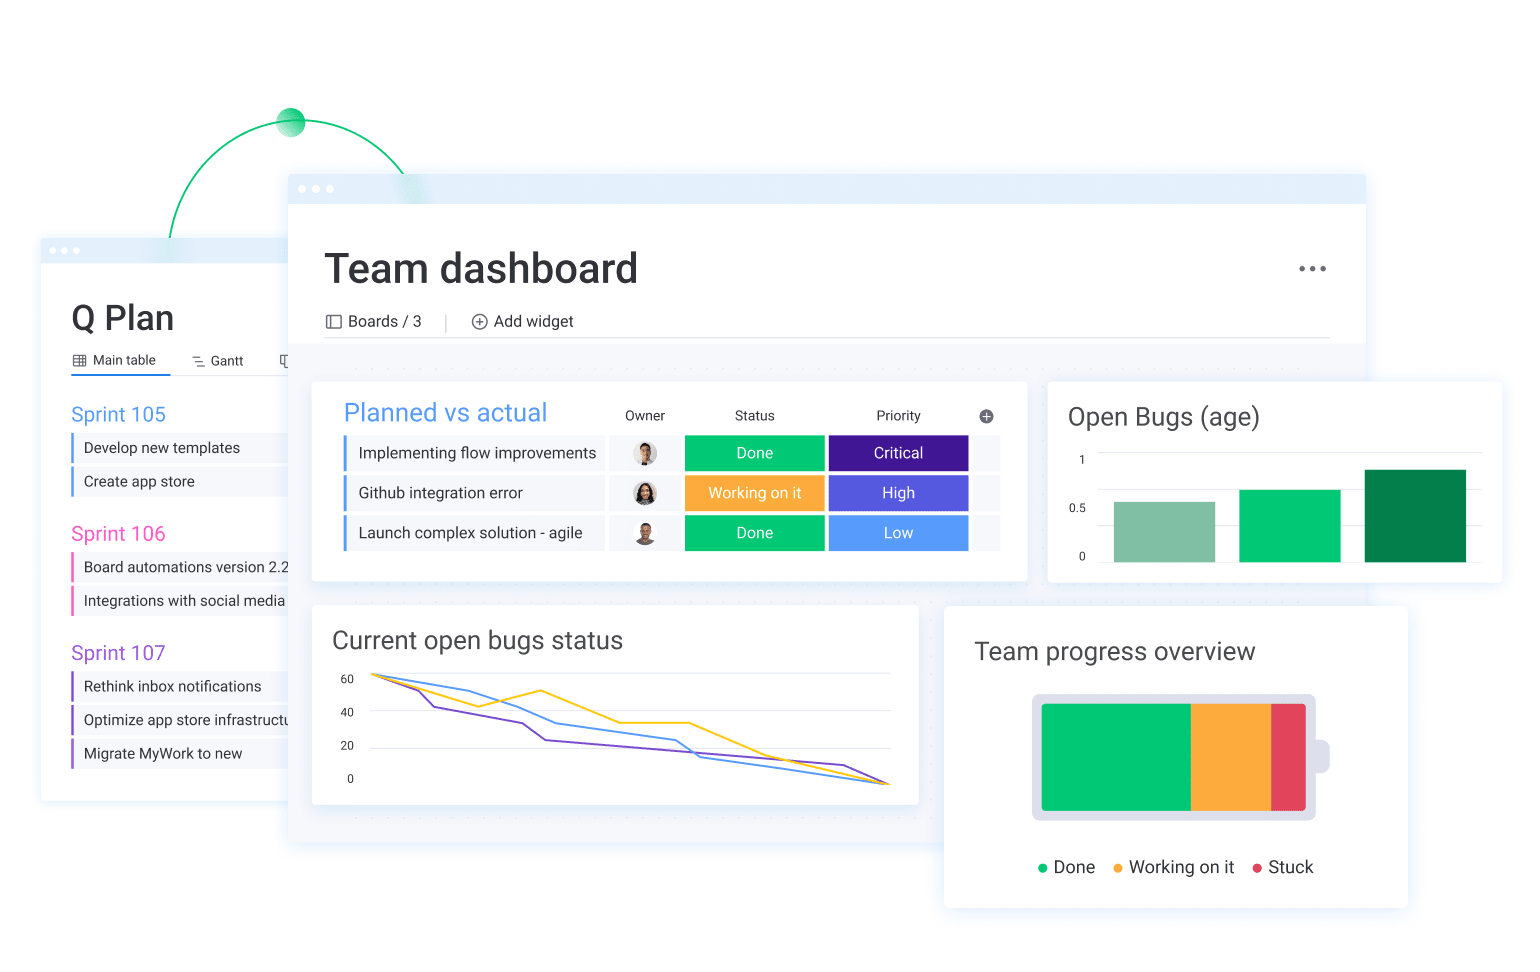 Team dashboard